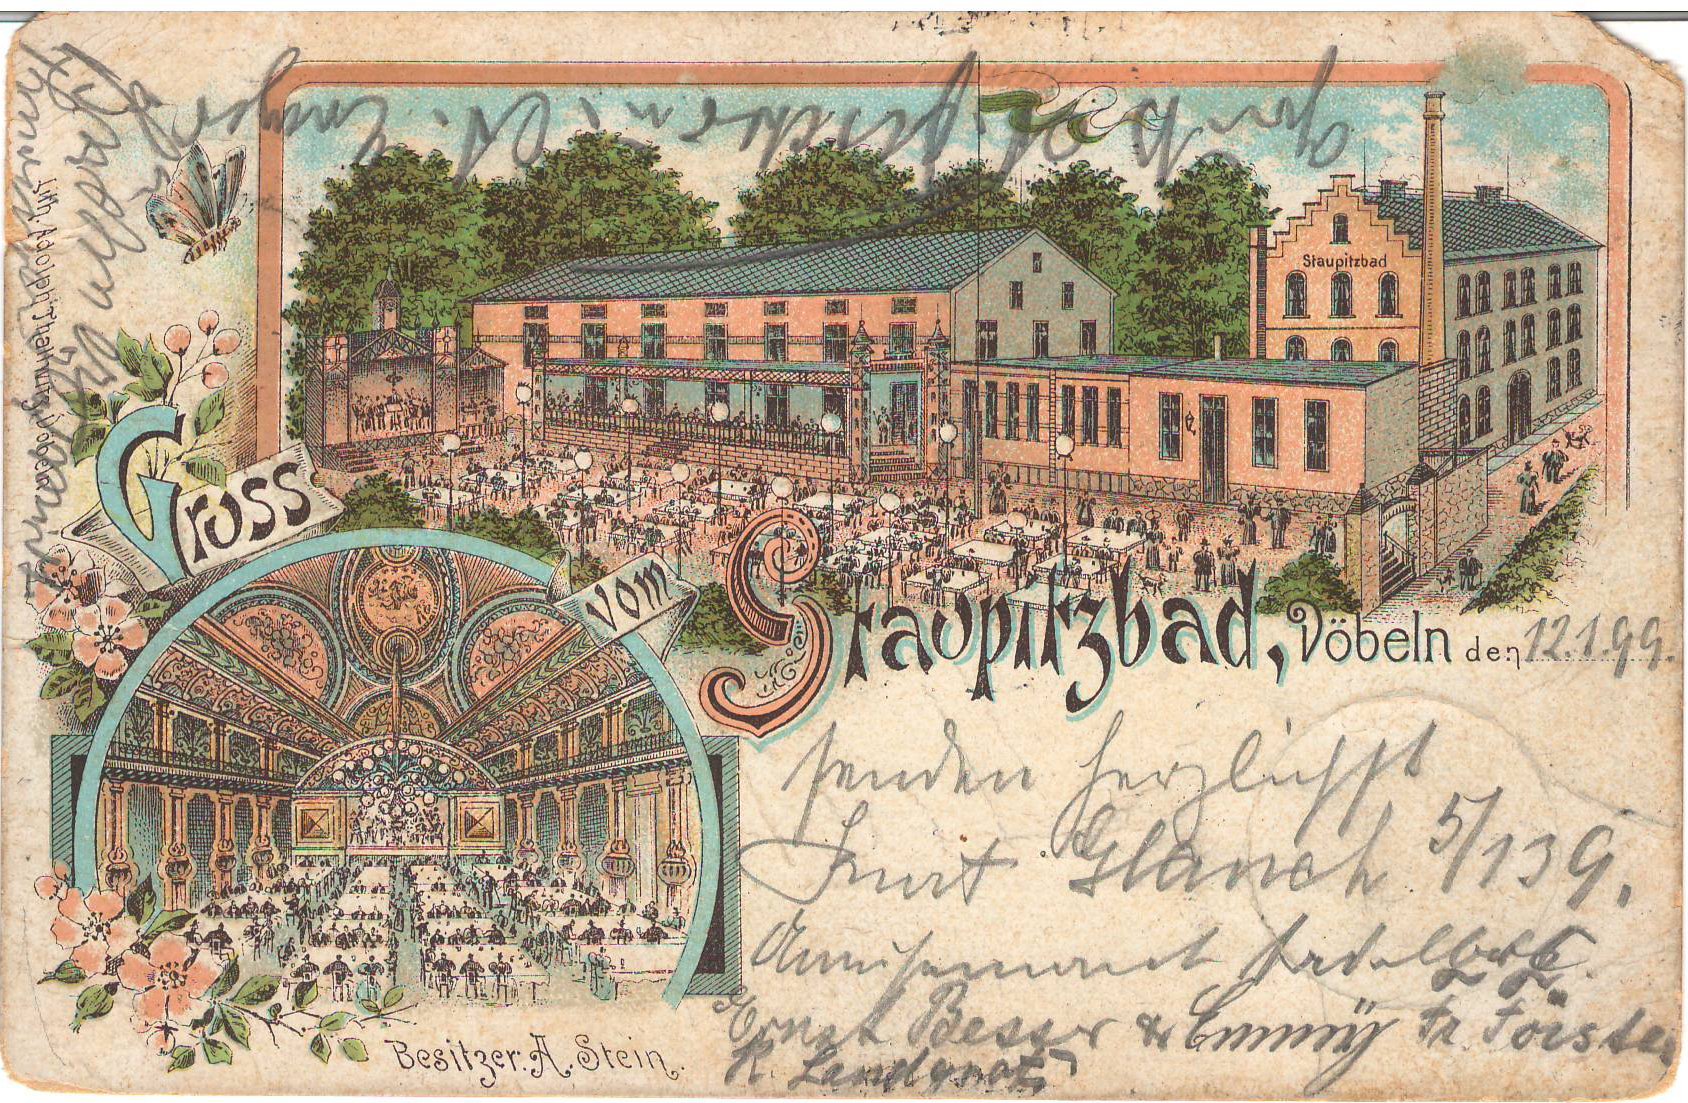 Ansichtspostkarte Döbeln: Gruß vom Staupitzbad (Stadtmuseum / Kleine Galerie Döbeln CC BY-NC-SA)